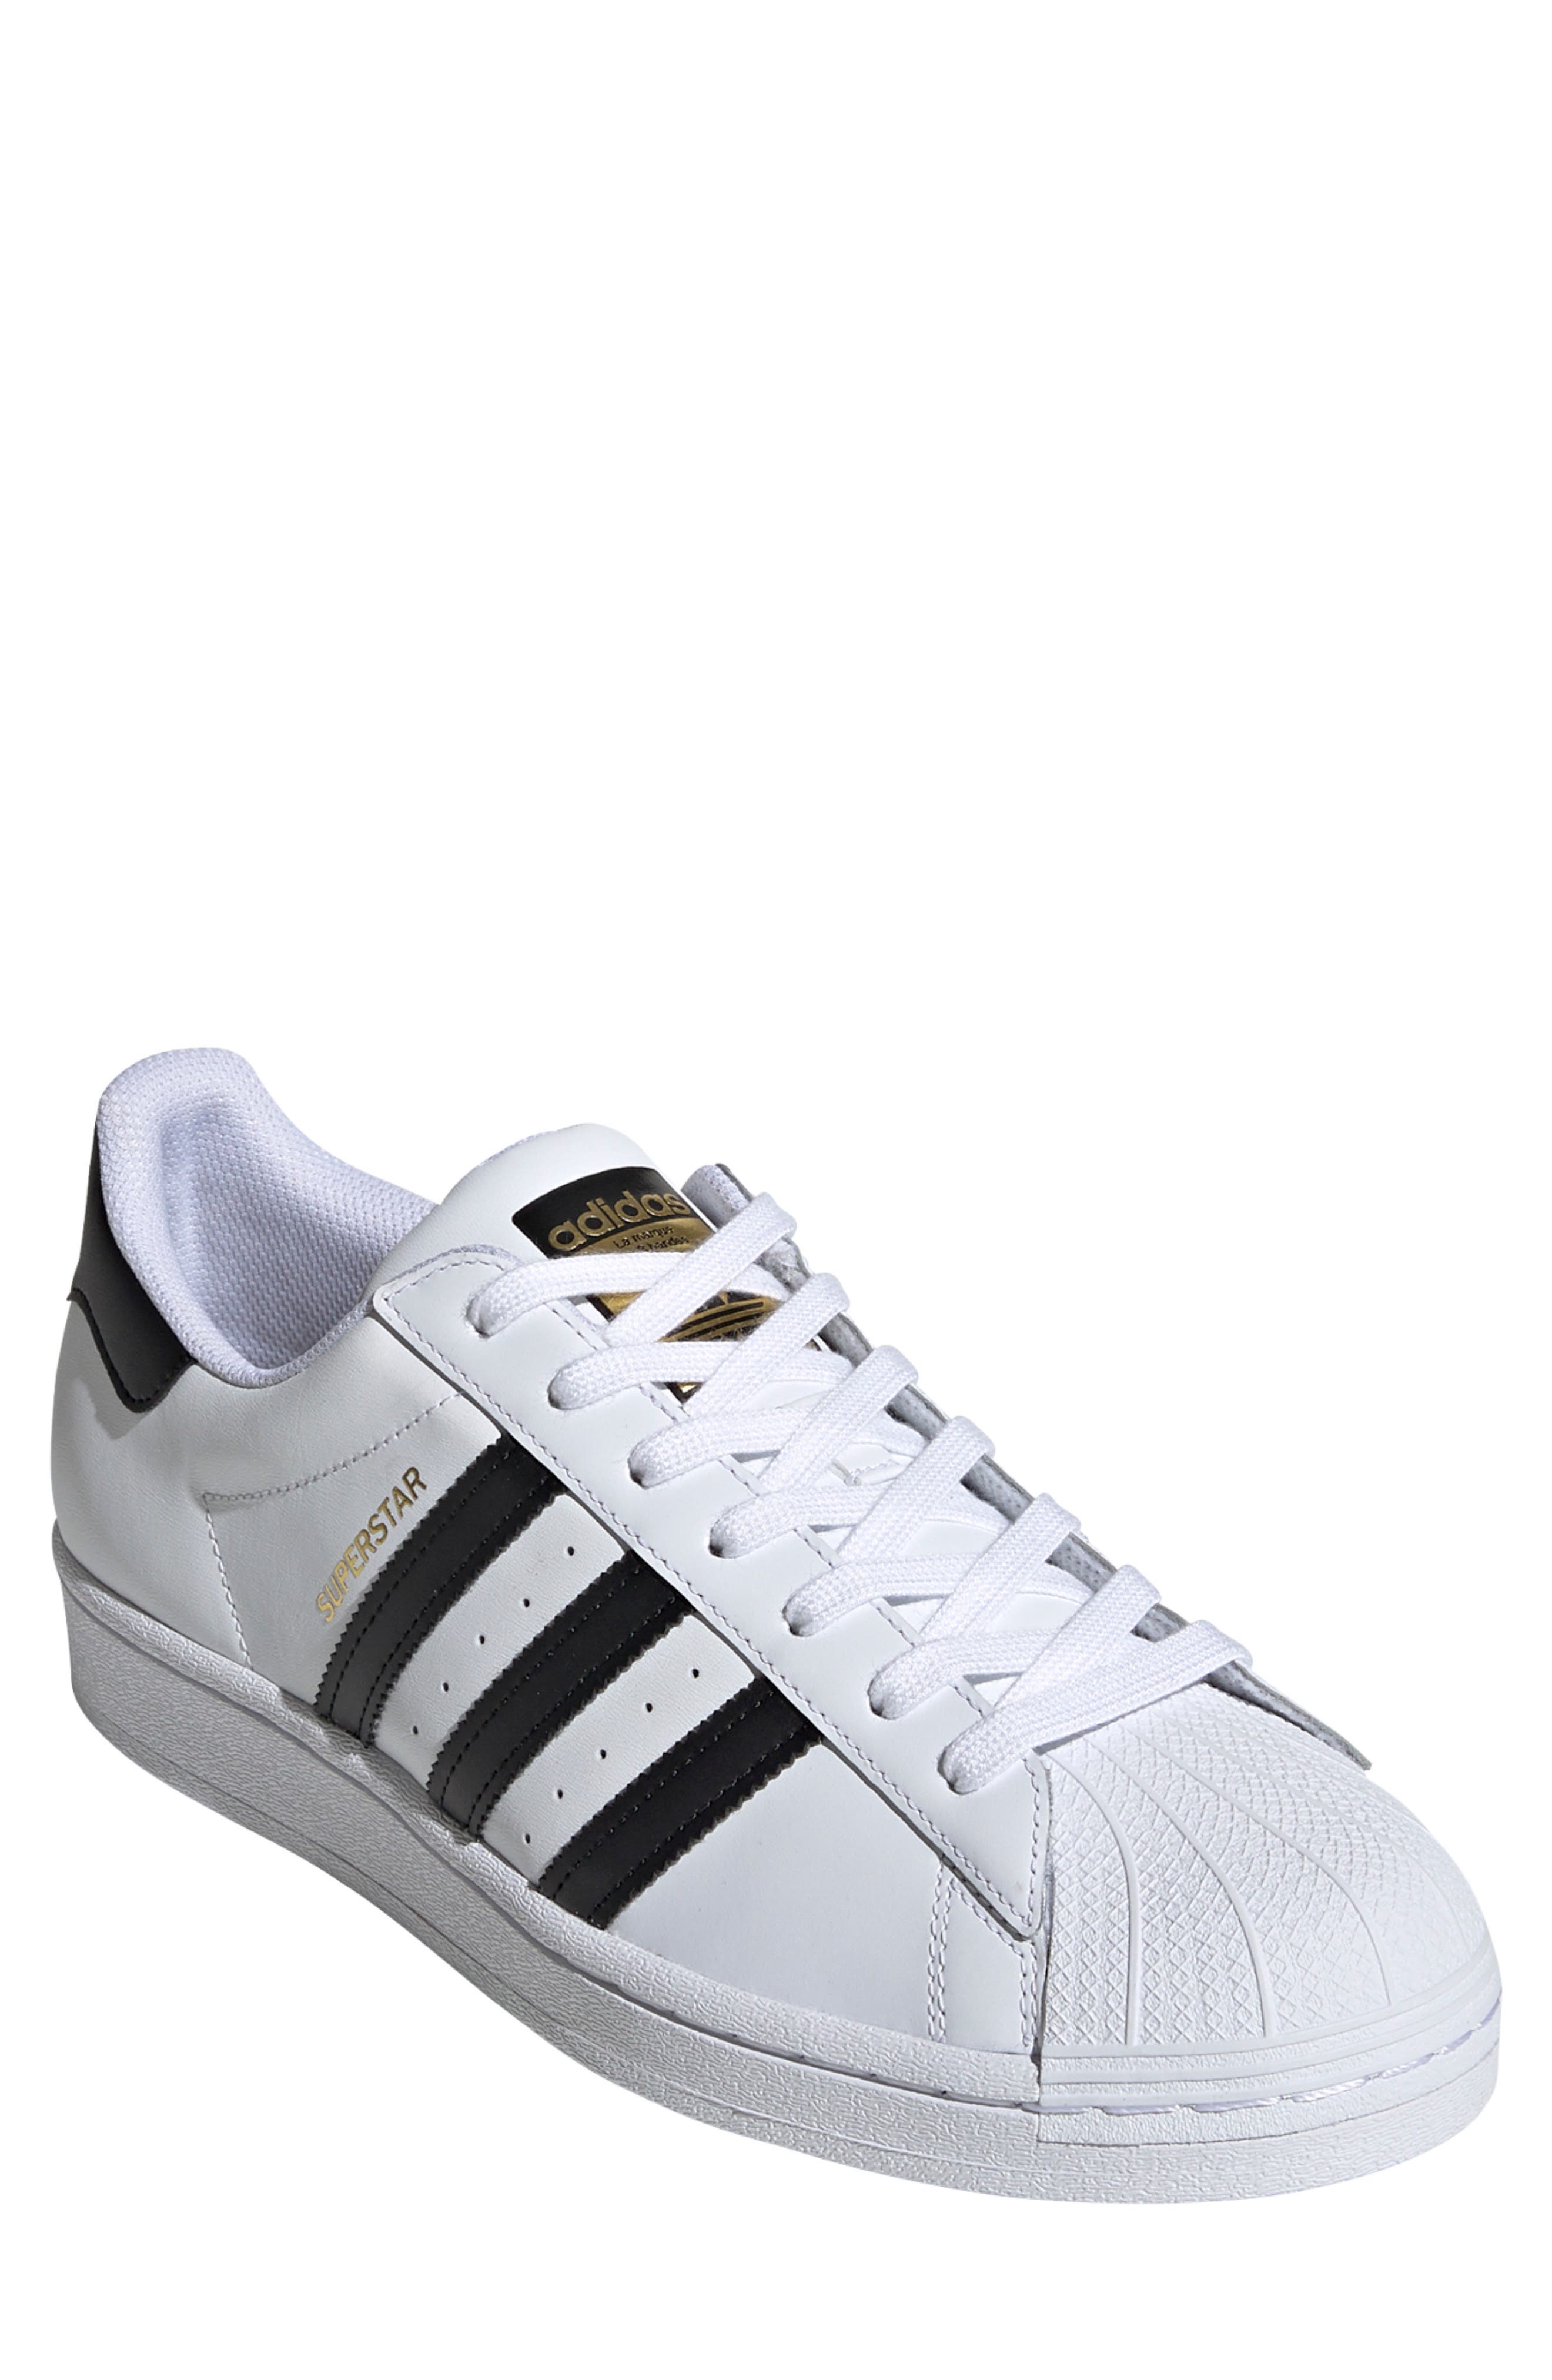 adidas Superstar Sneaker in White/White/White at Nordstrom